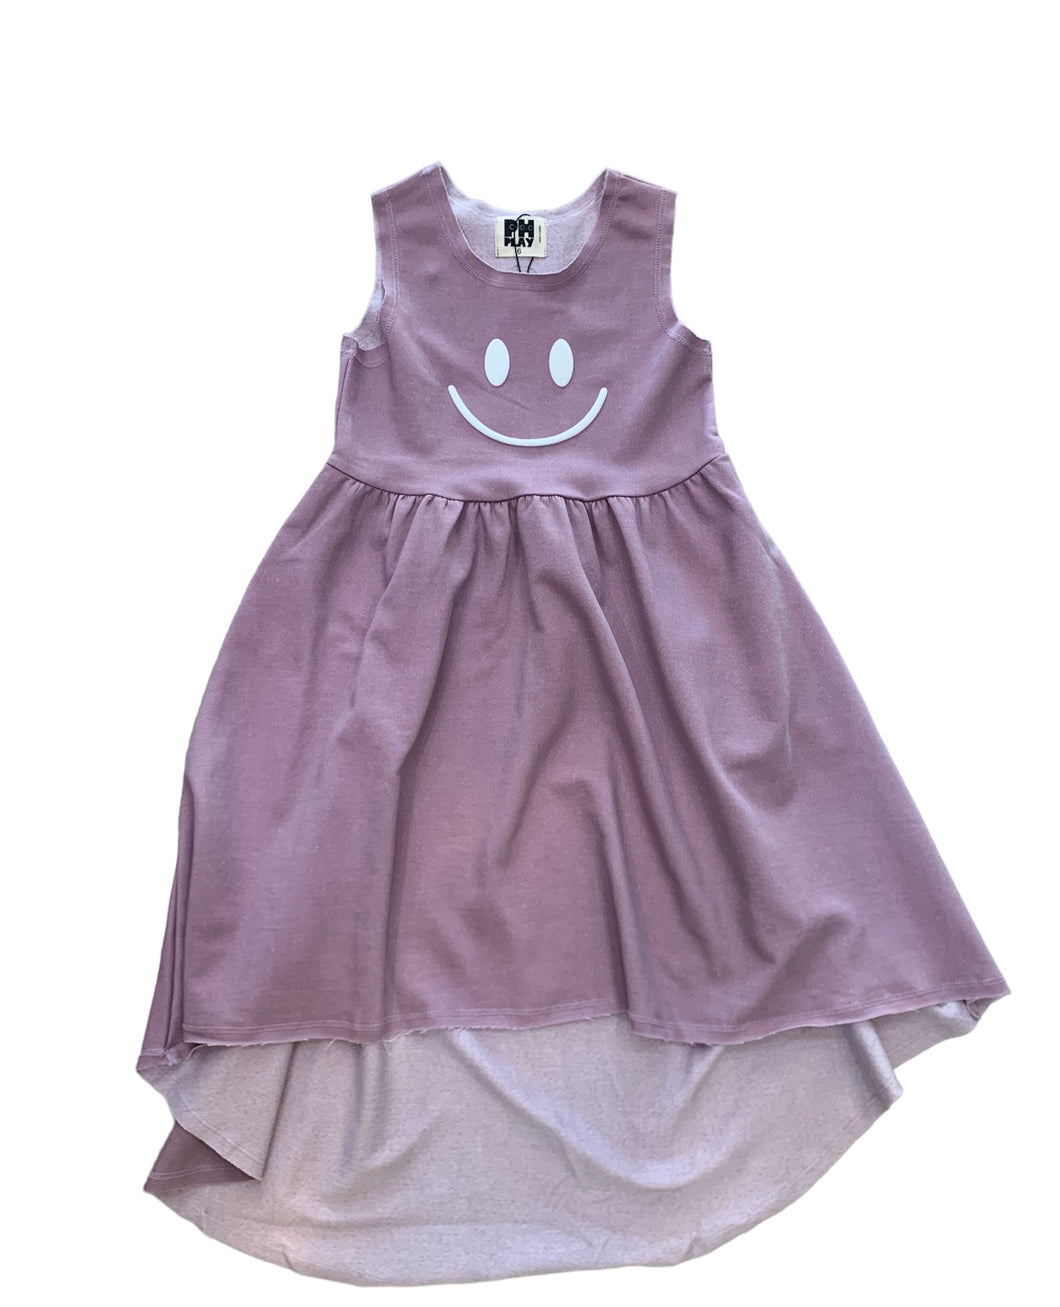 Lavender Smiley Swing Dress